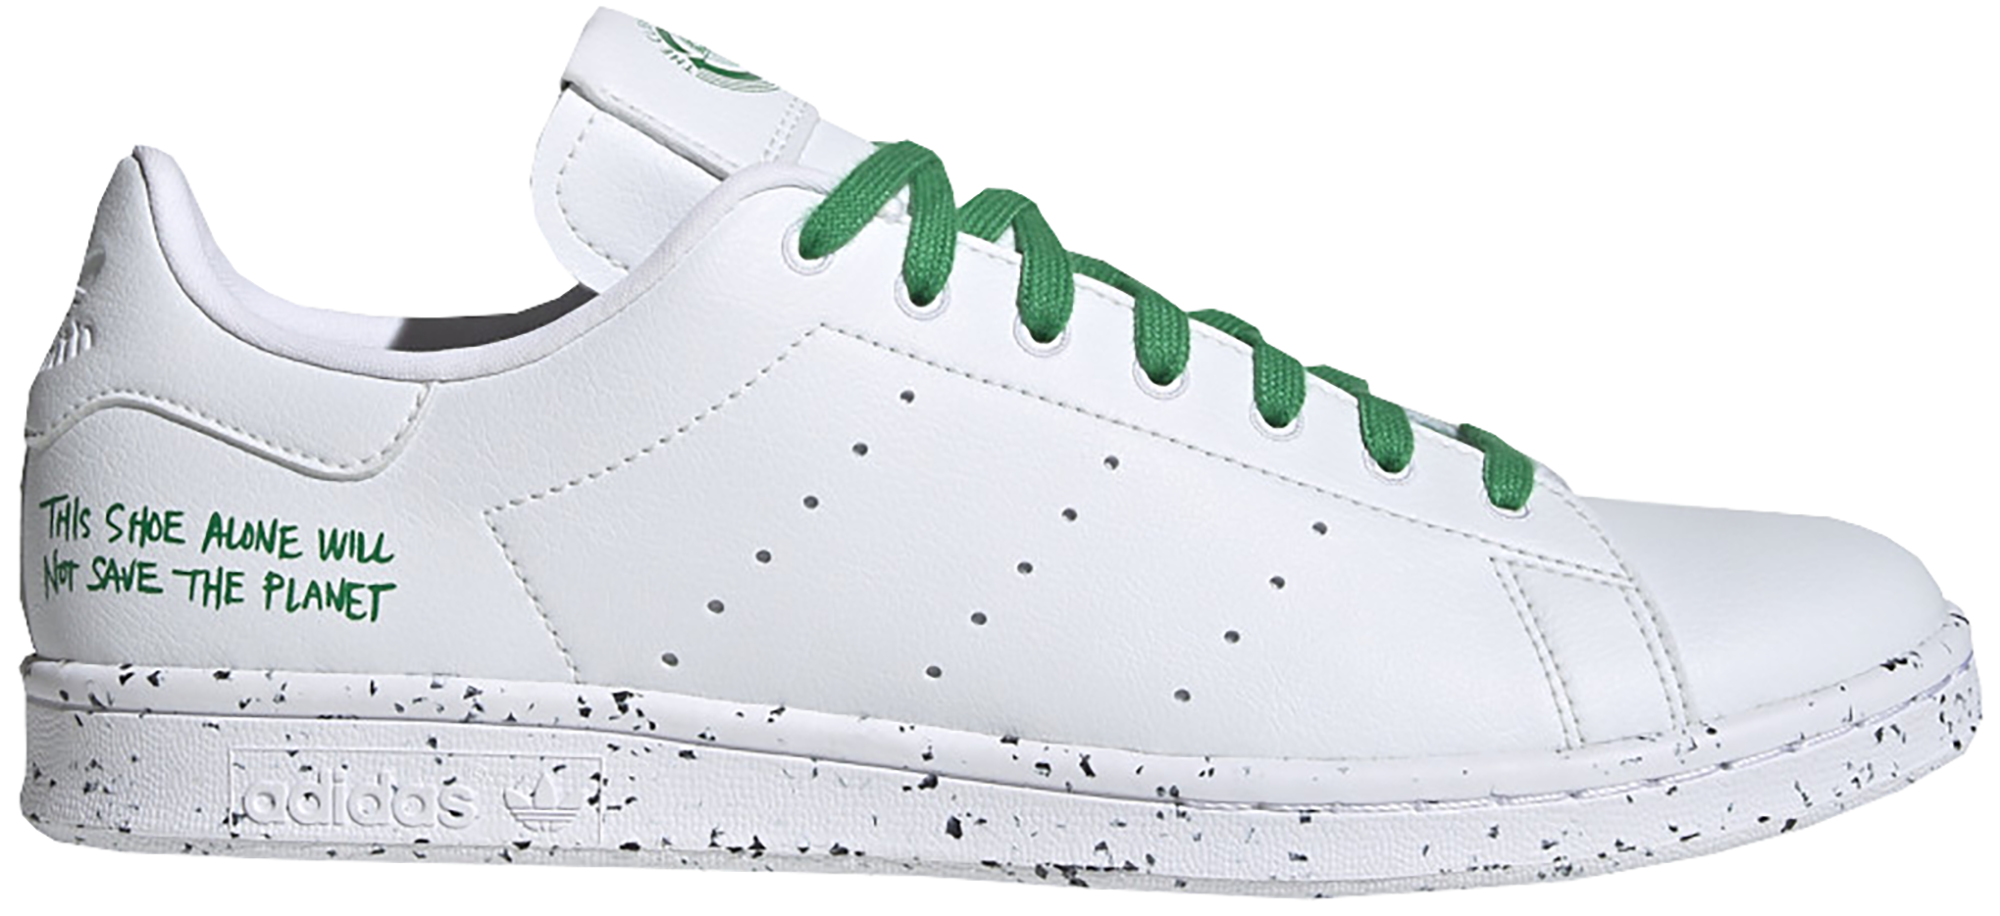 stan smith adidas green and white